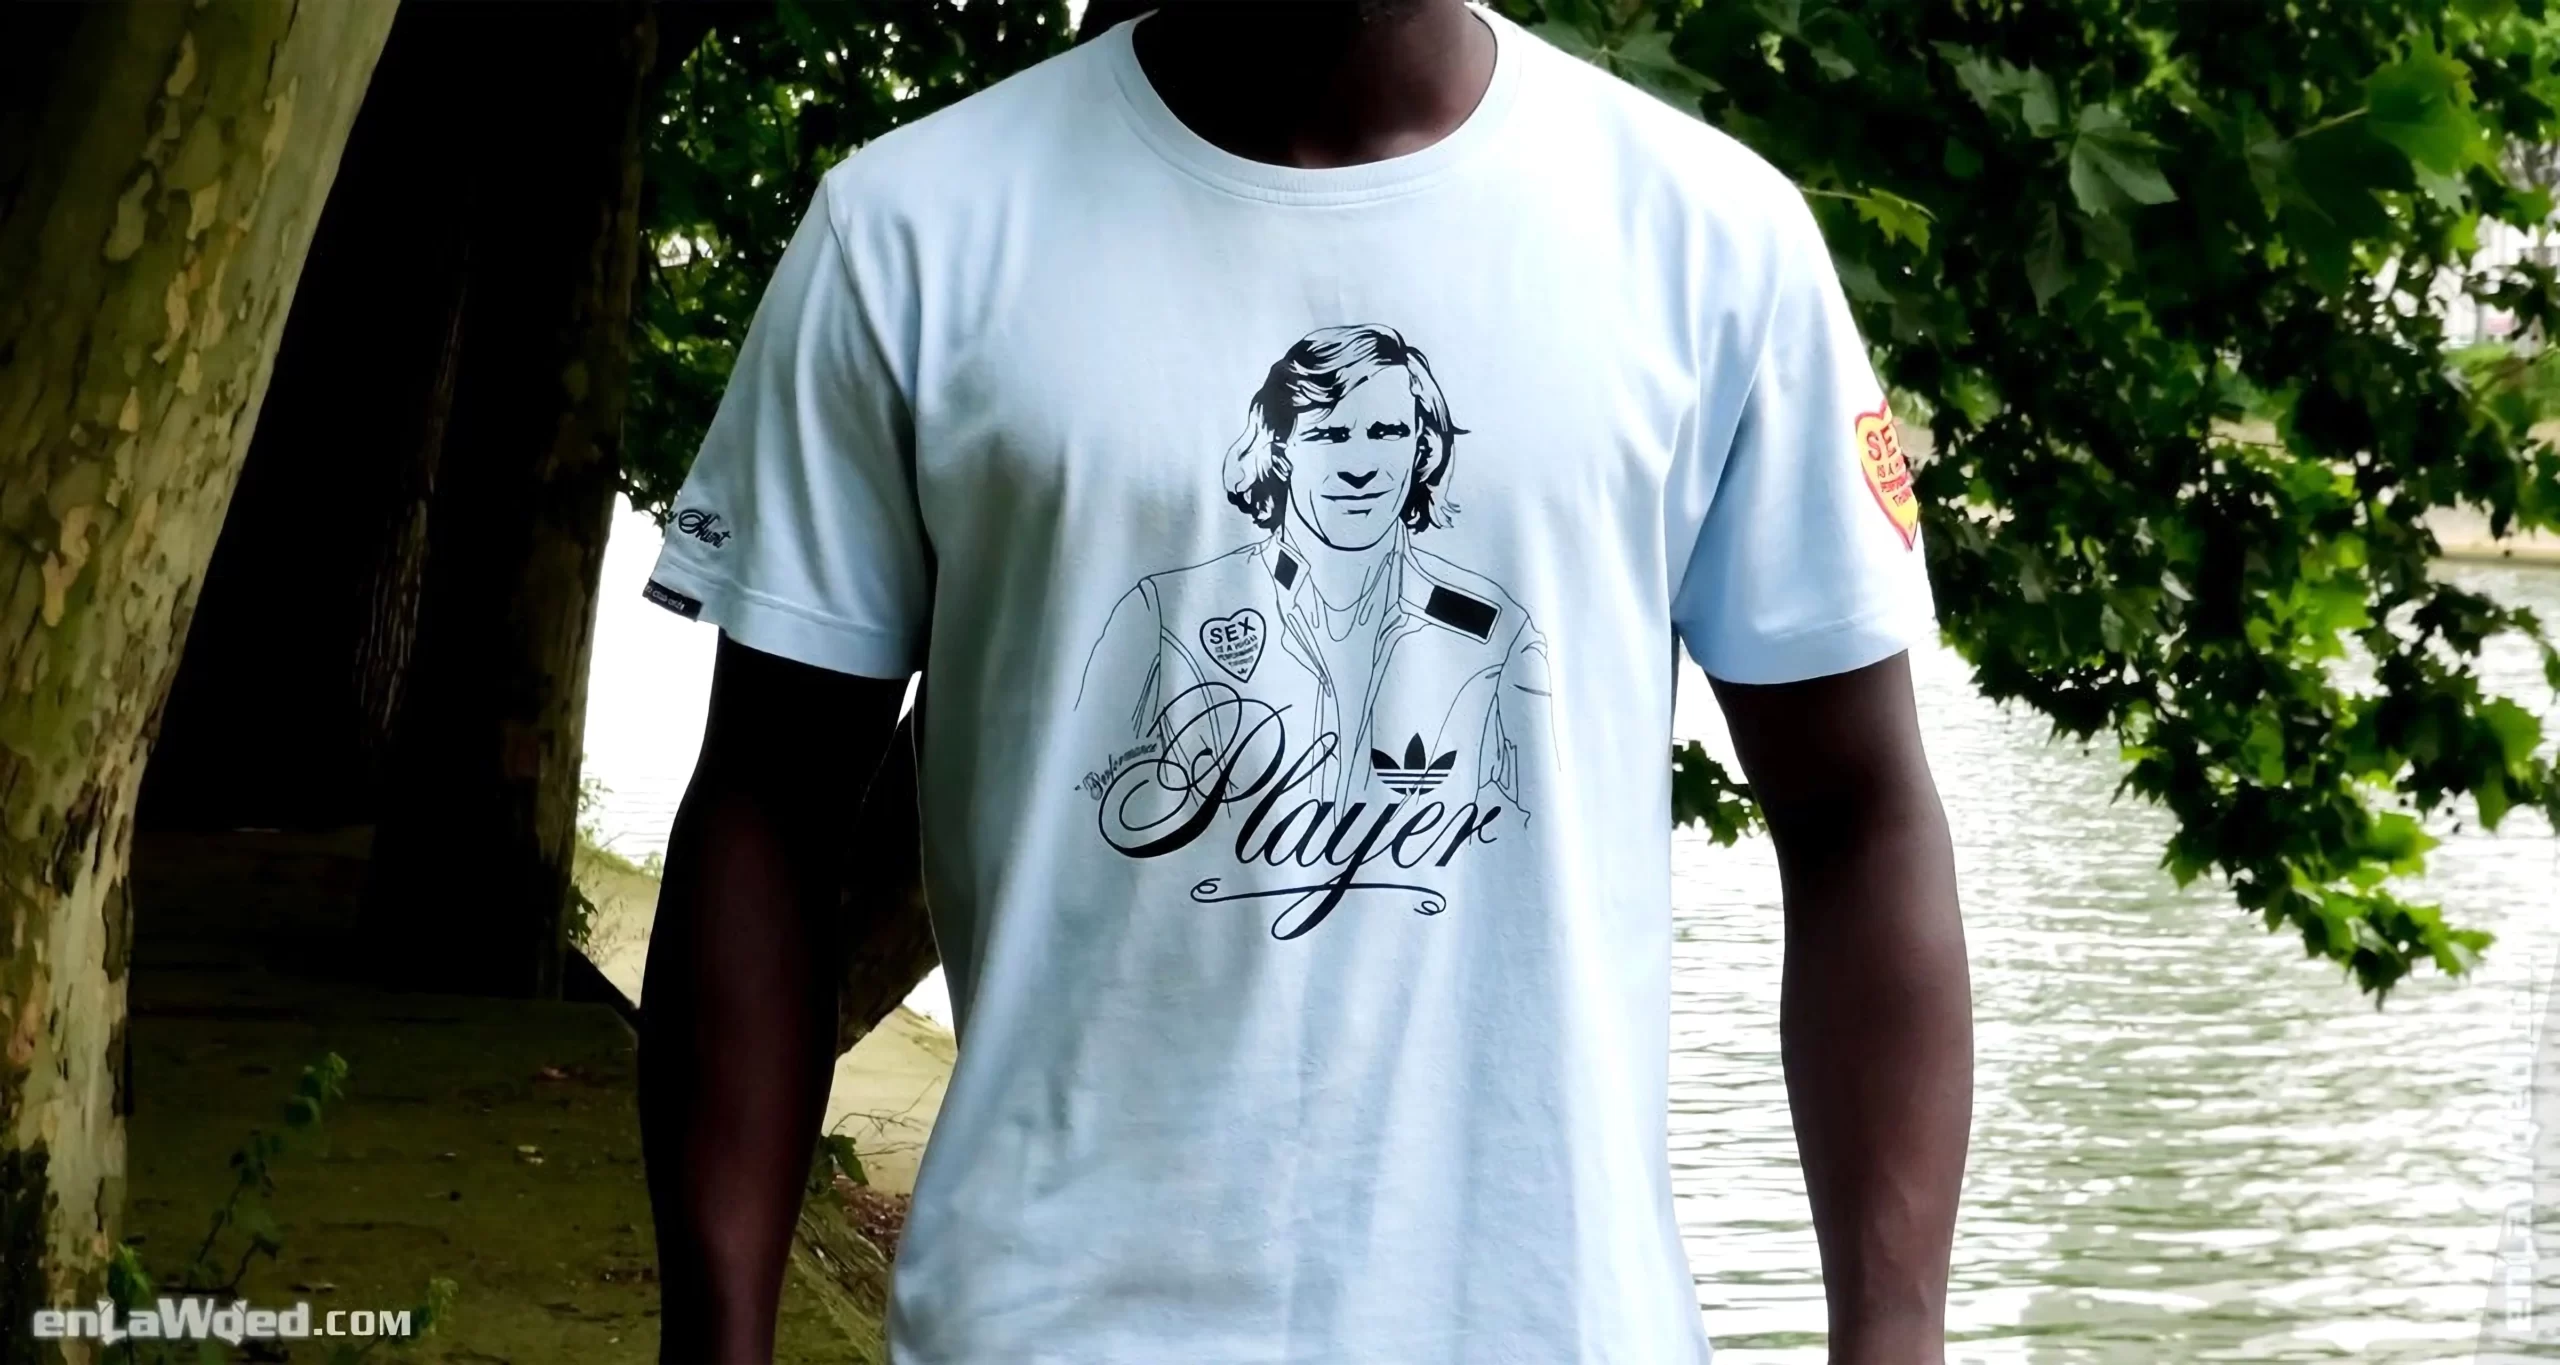 Men’s 2006 James Hunt Player’s Club T-Shirt by Adidas: Frisky (EnLawded.com file #lmchk90315ip2y125020kg9st)